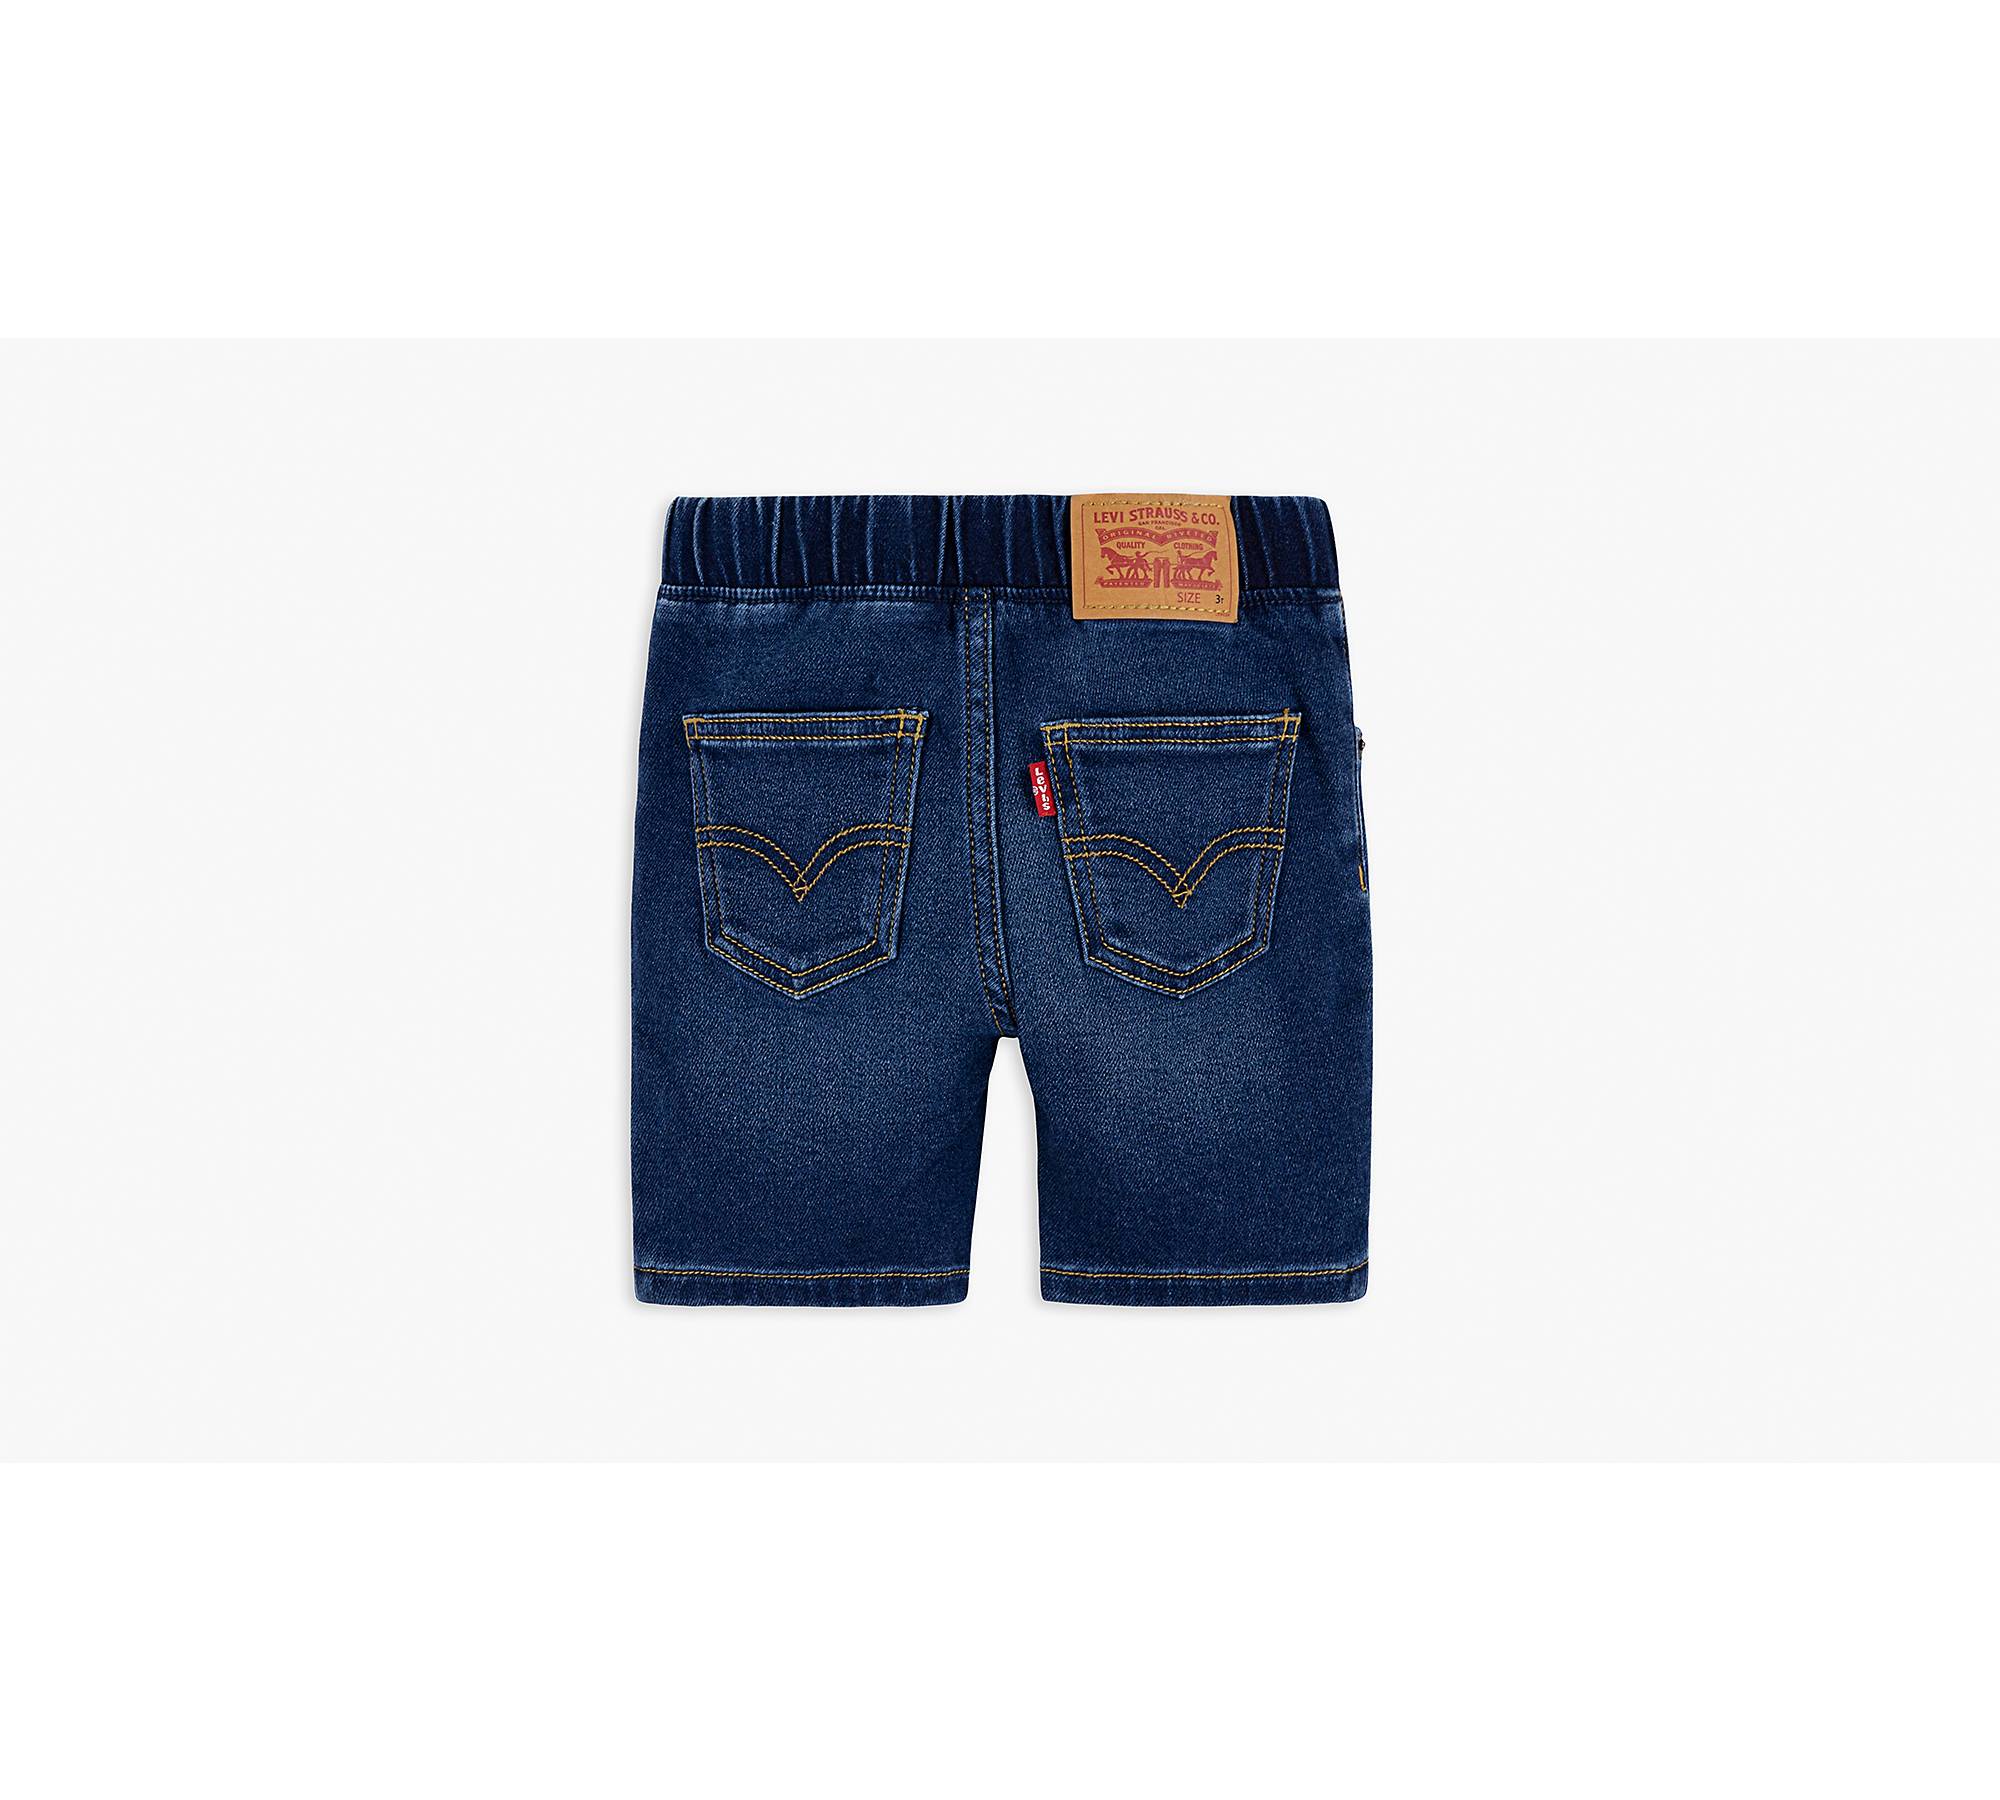 Skinny Fit Pull On Shorts Toddler Boys 2t-4t - Medium Wash